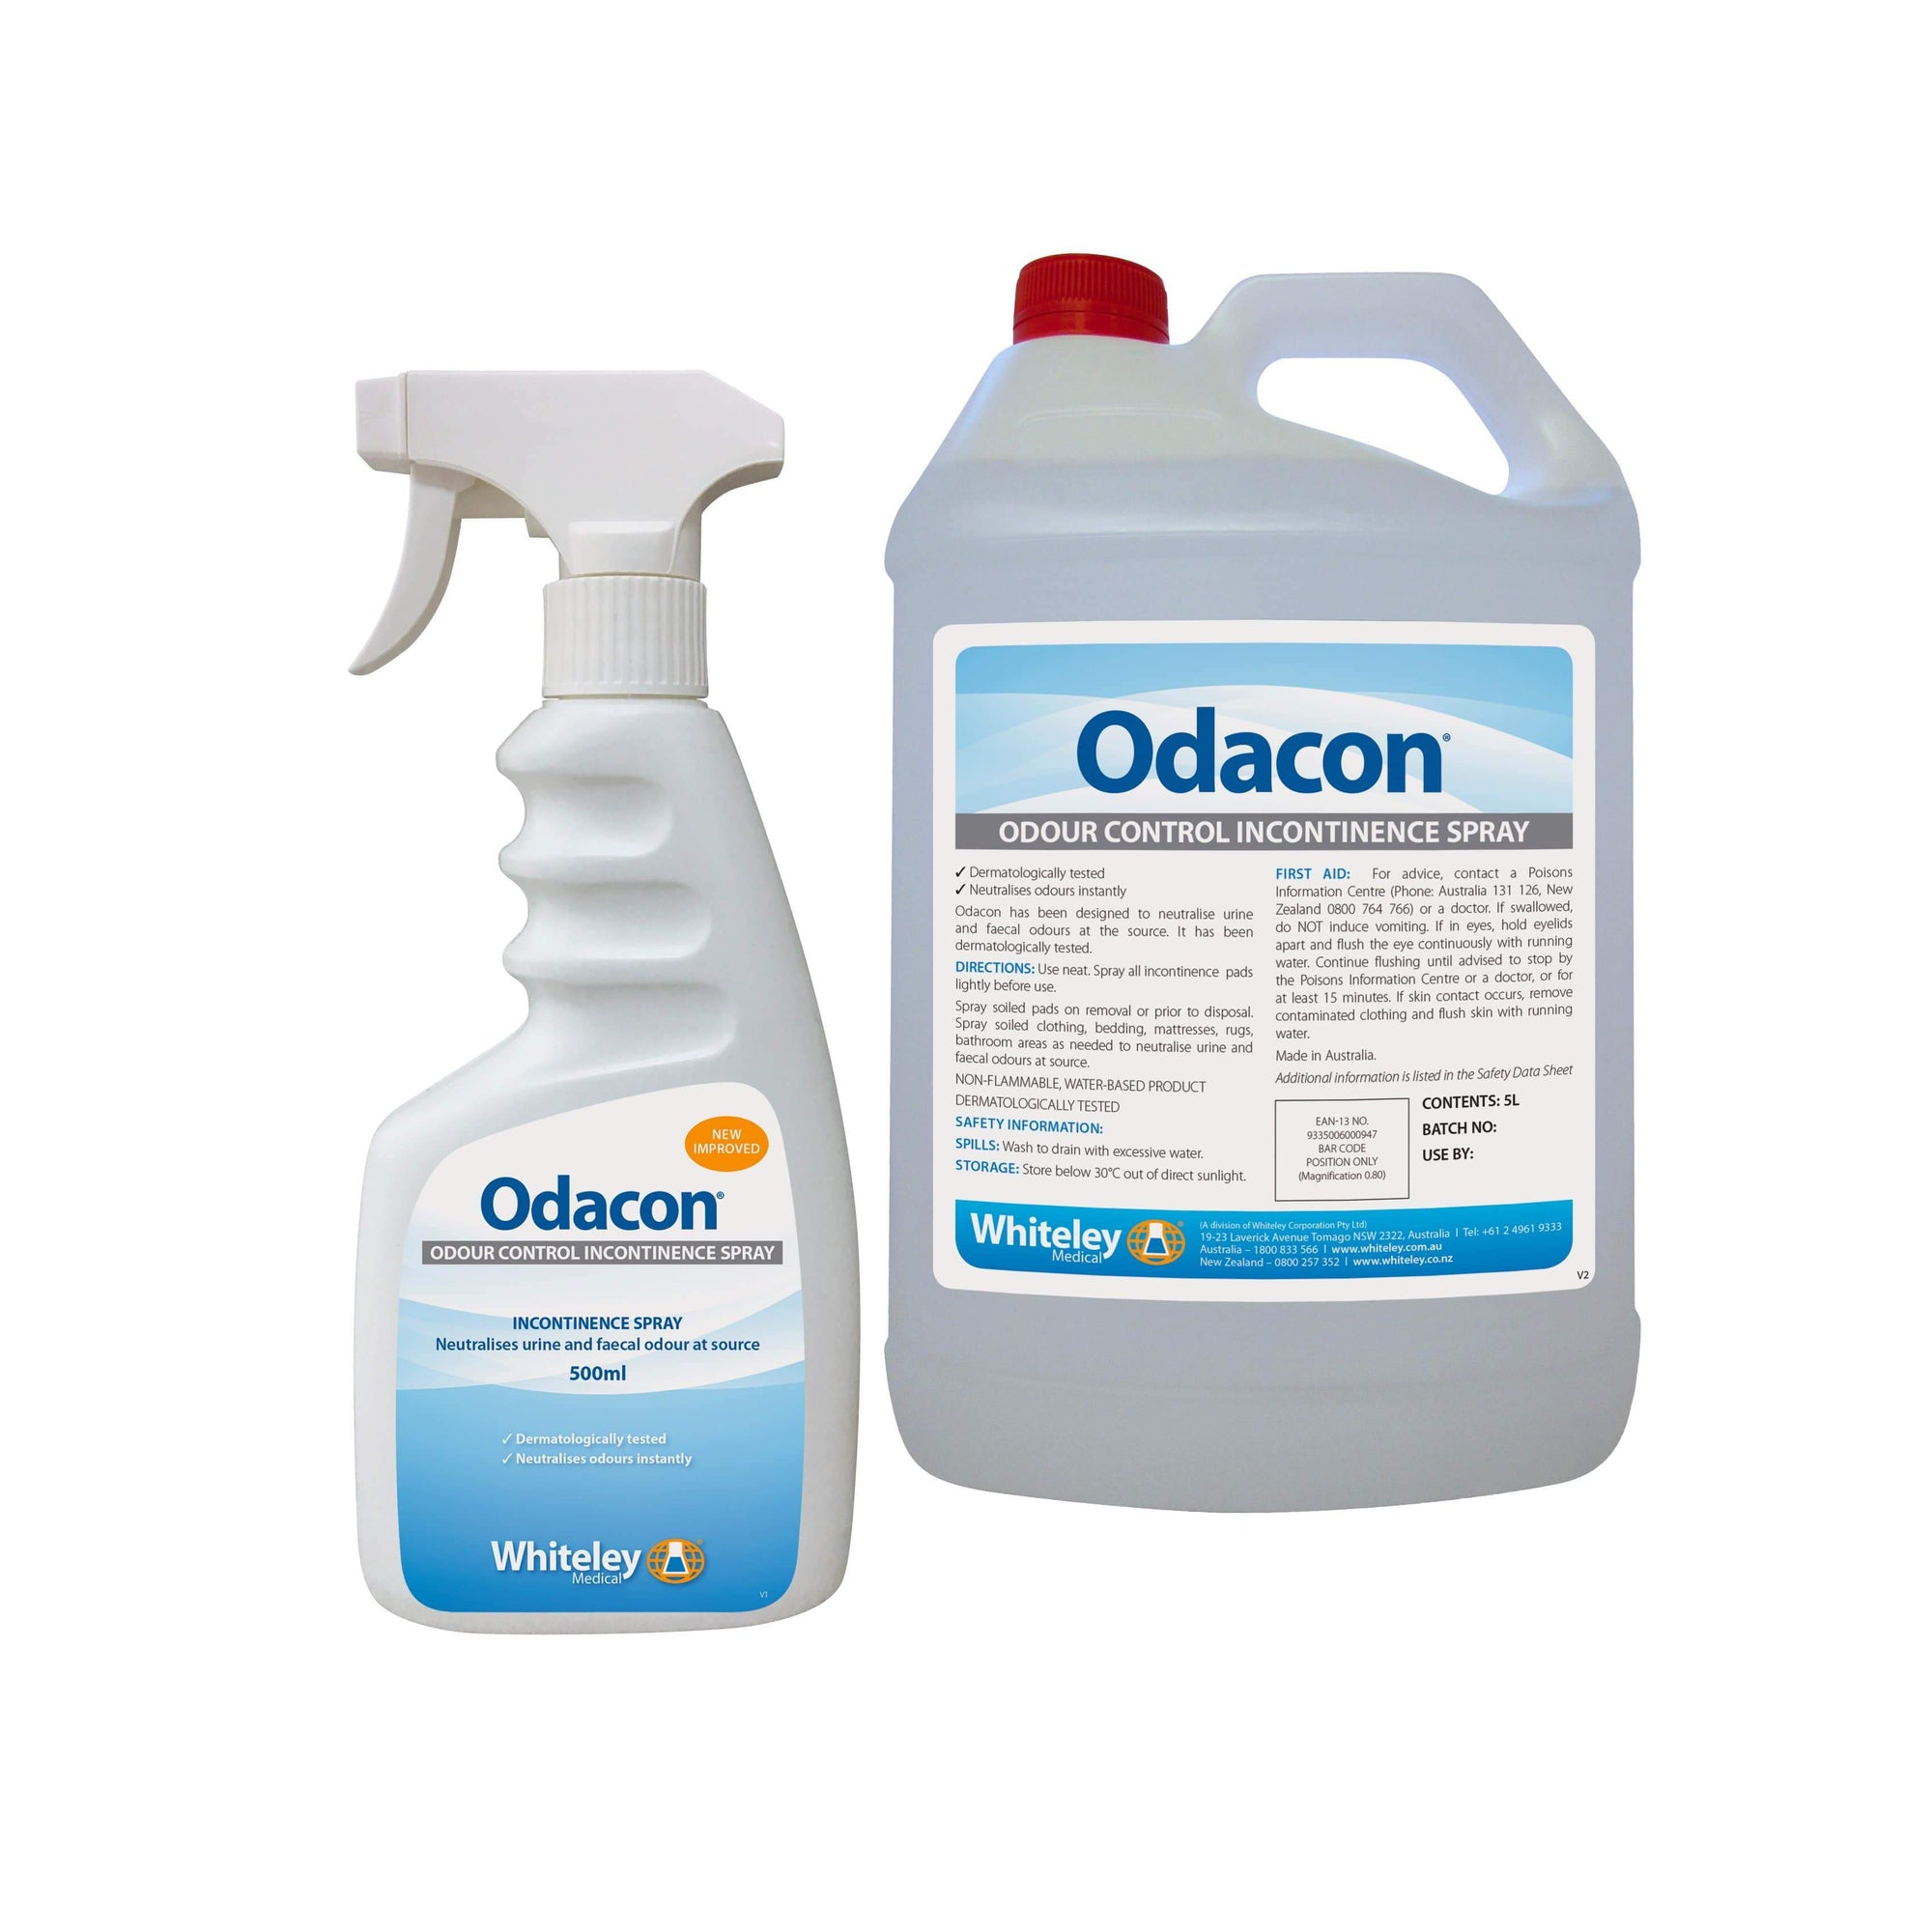 Odacon Odour Control Neutraliser